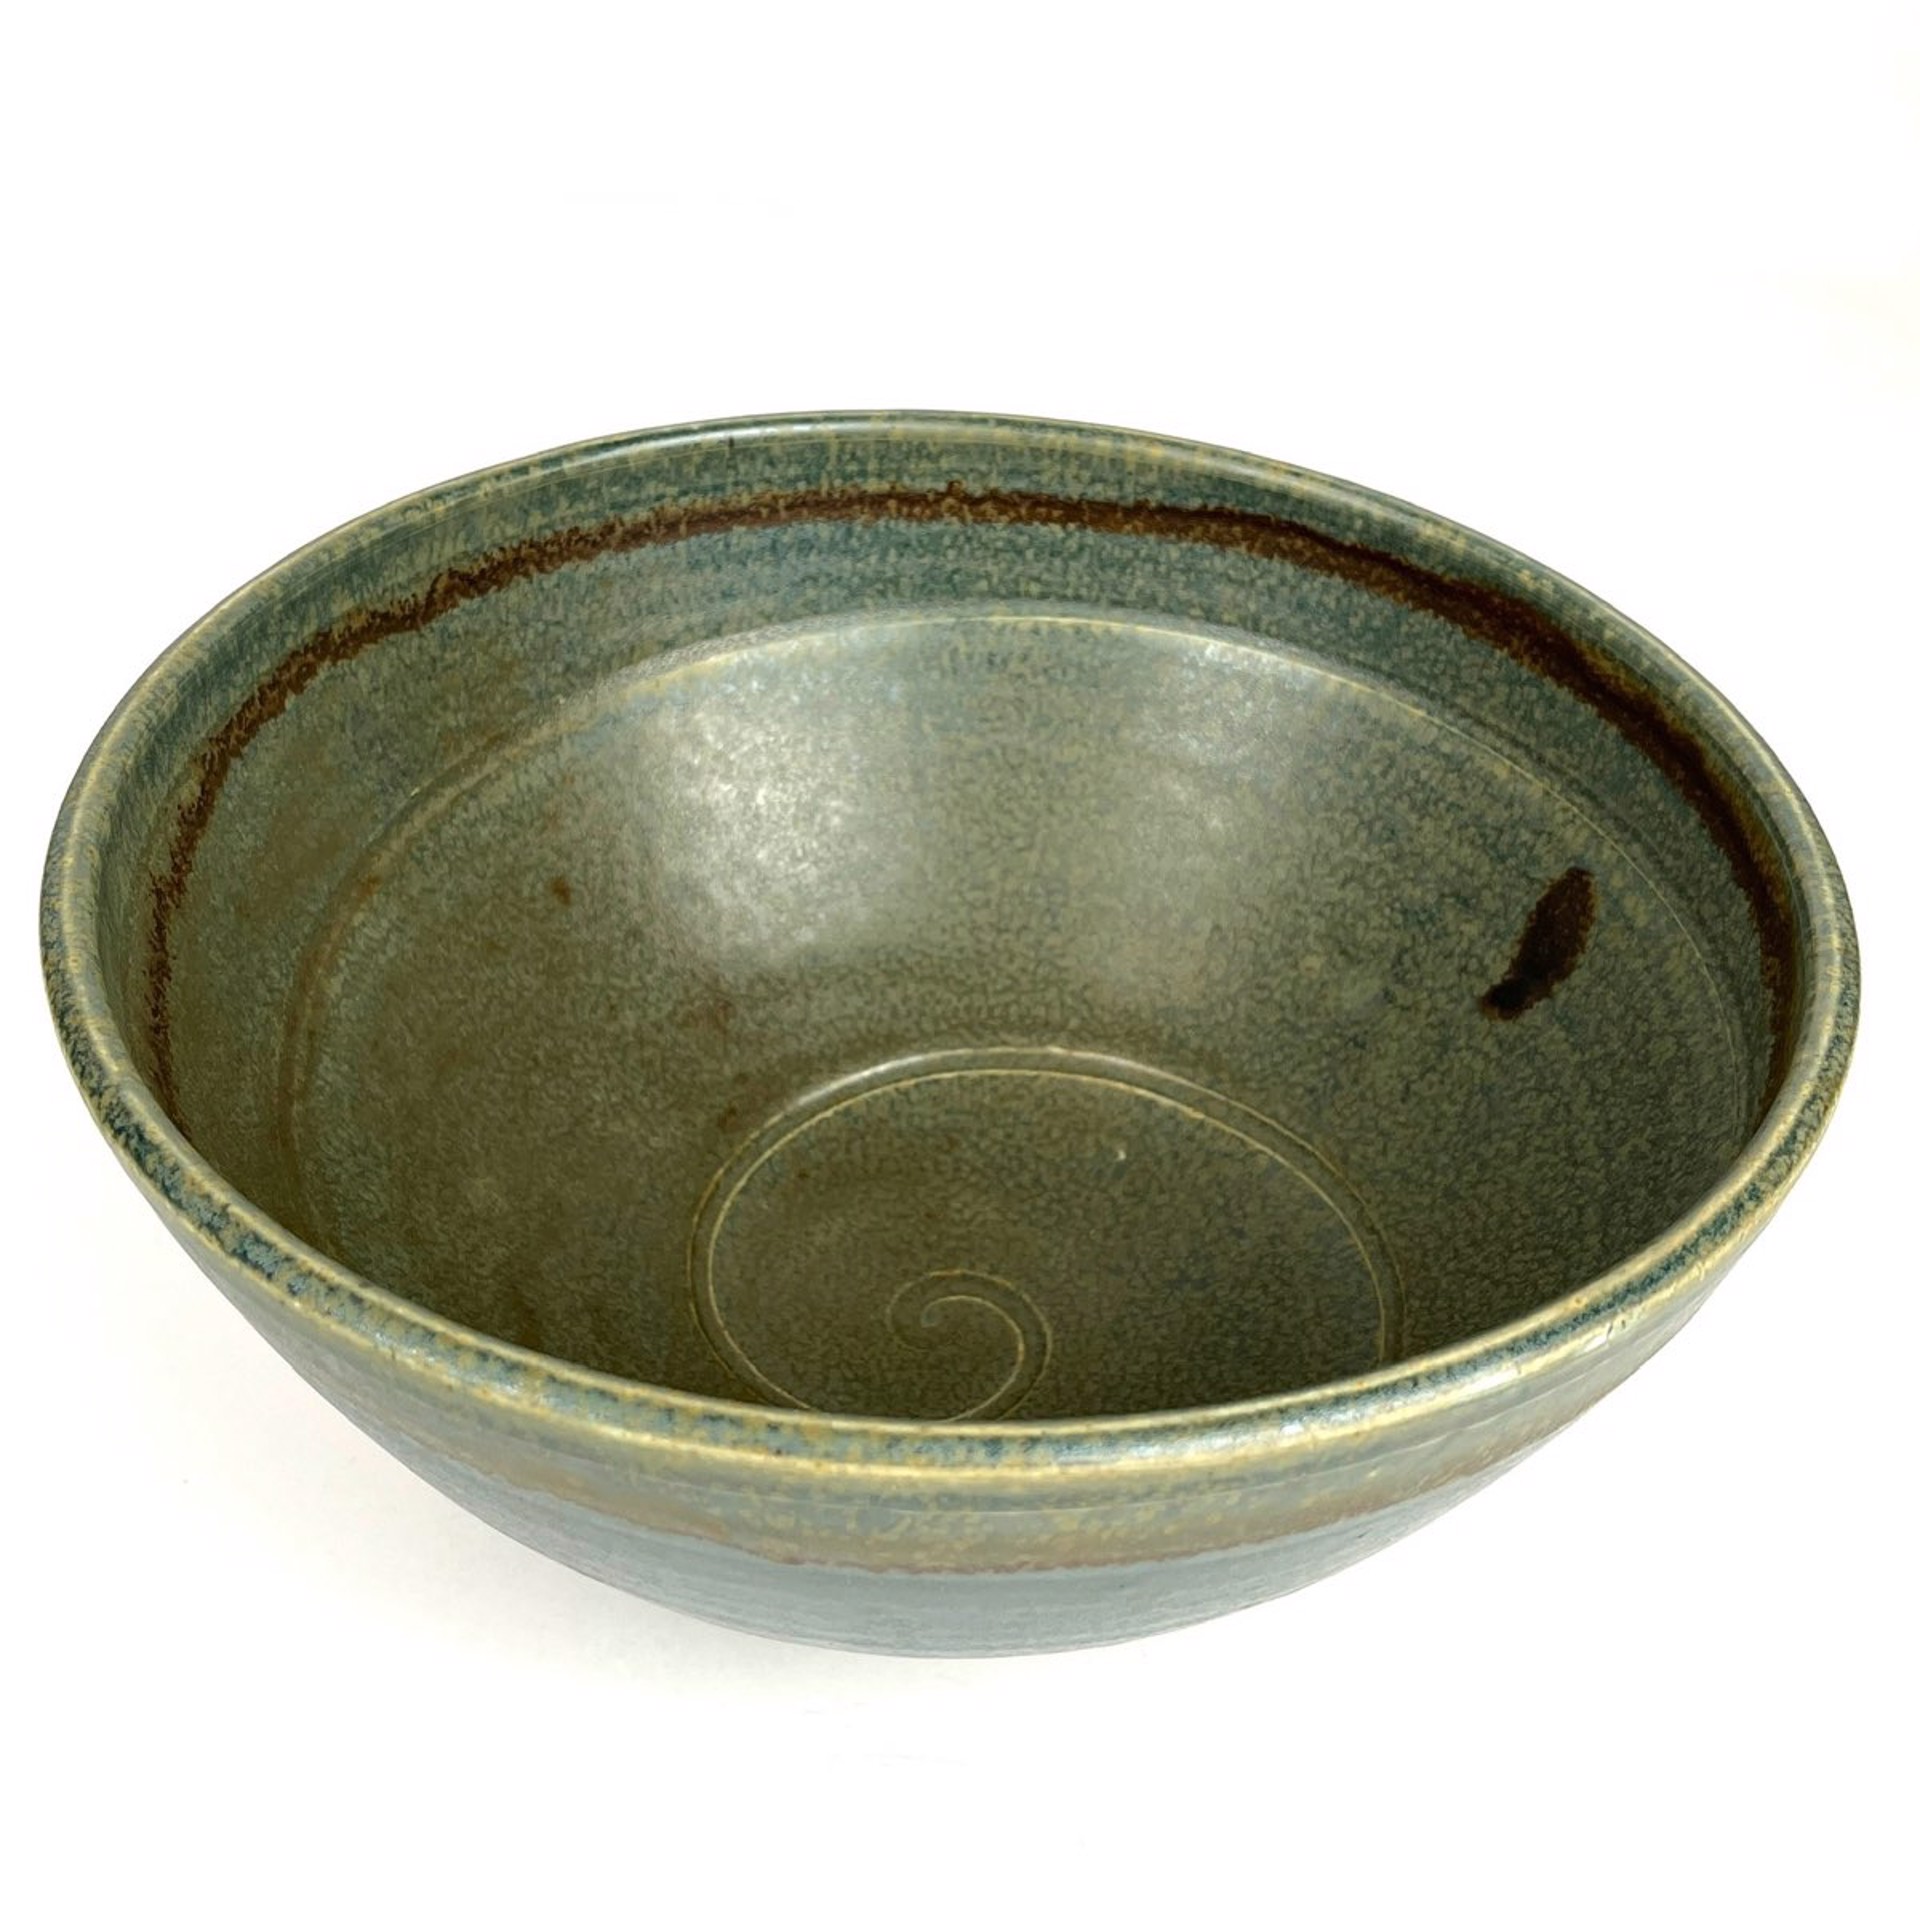 Large Bowl by Mary Lynn Portera